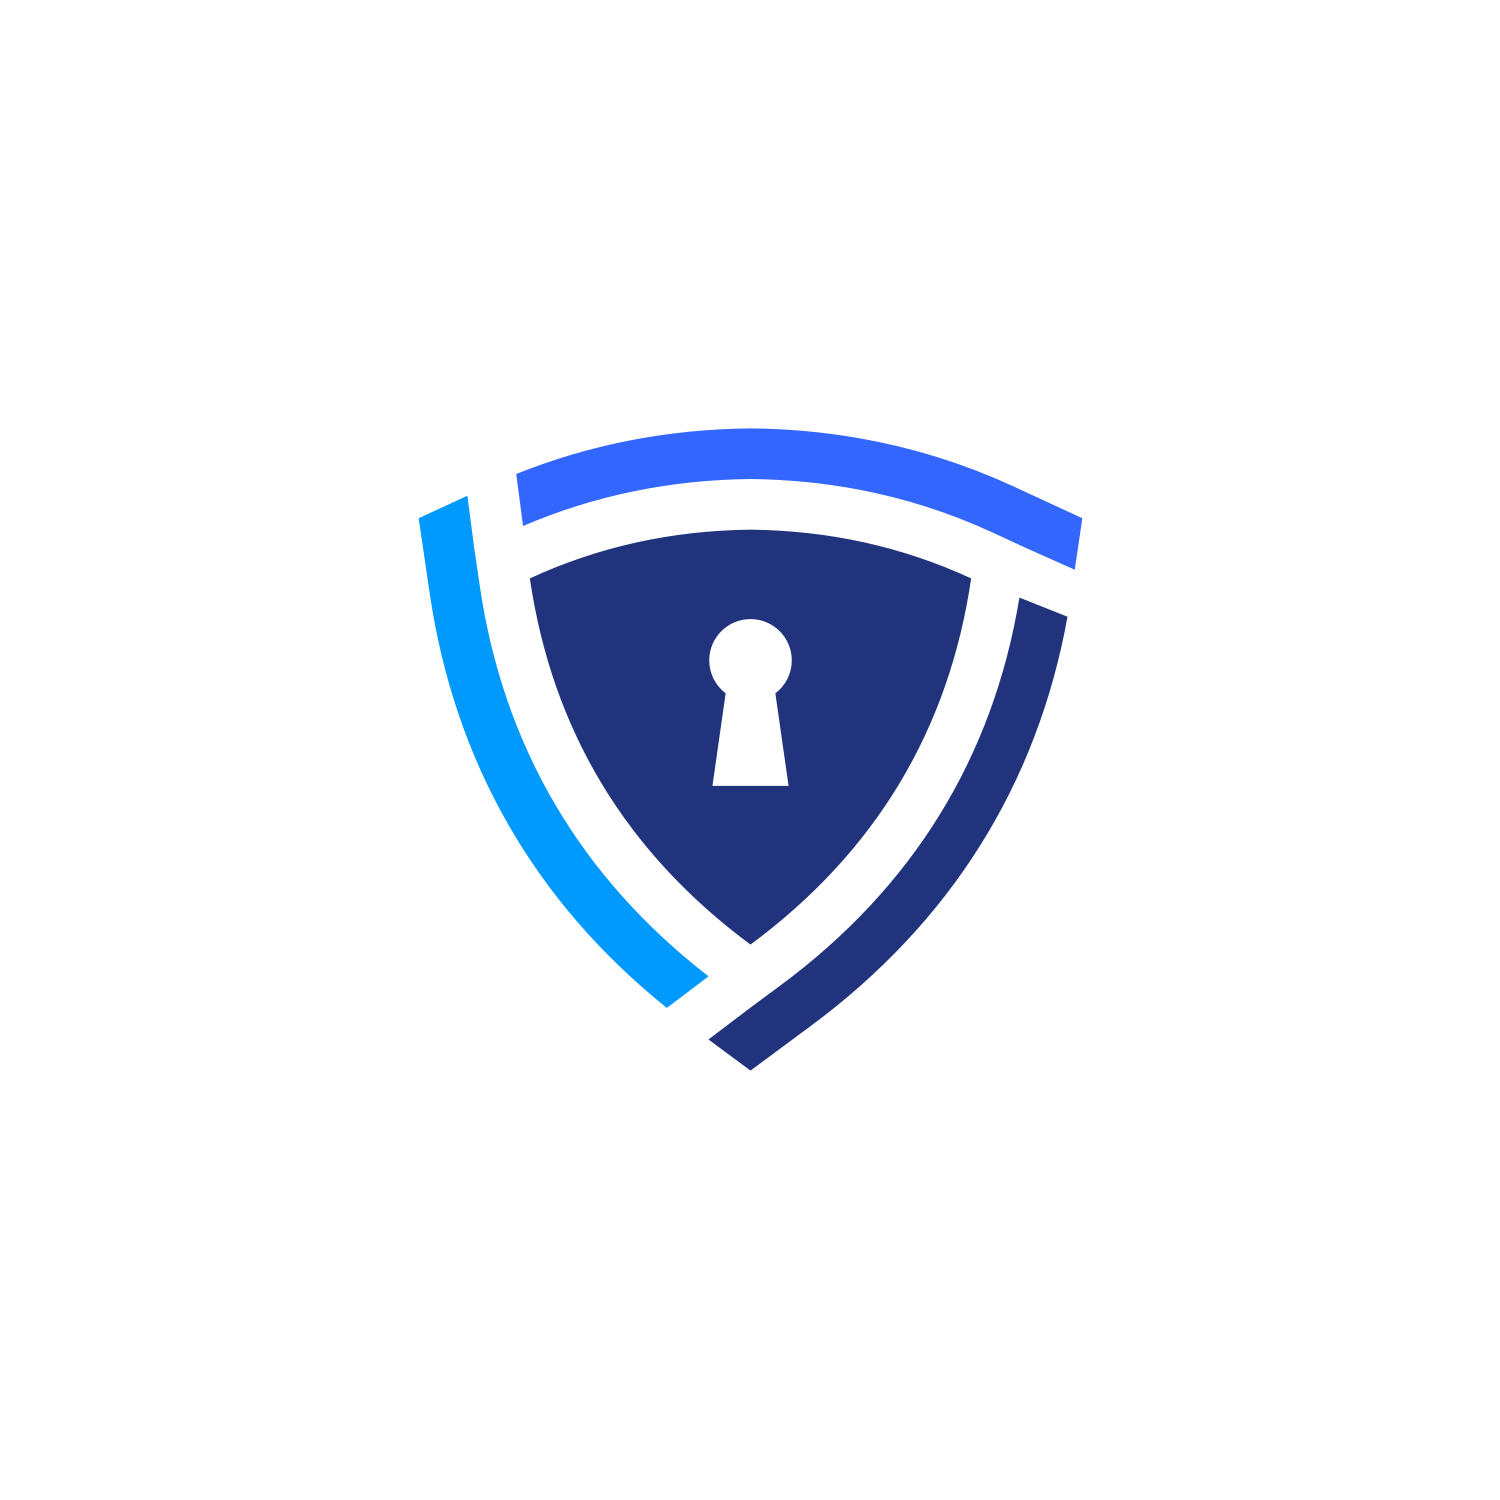 Security Shield Logo Vector Premium cover image.